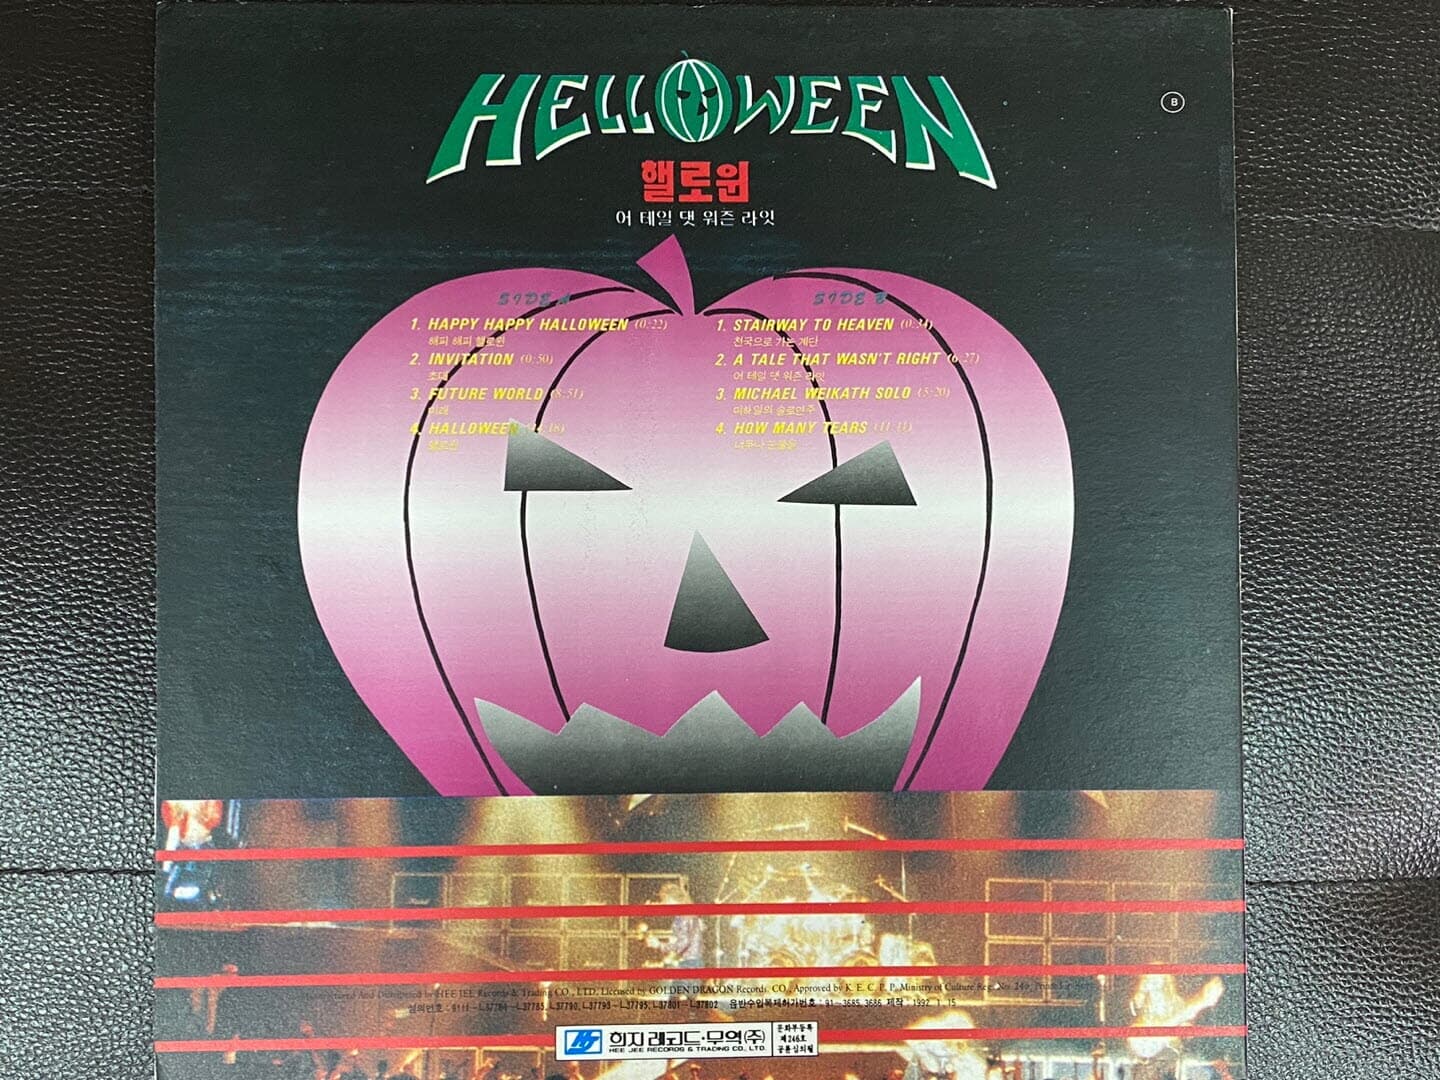 [LP] 헬로원 - Helloween - A Tale That Wasn't Right (Live) LP [희지-라이센스반]